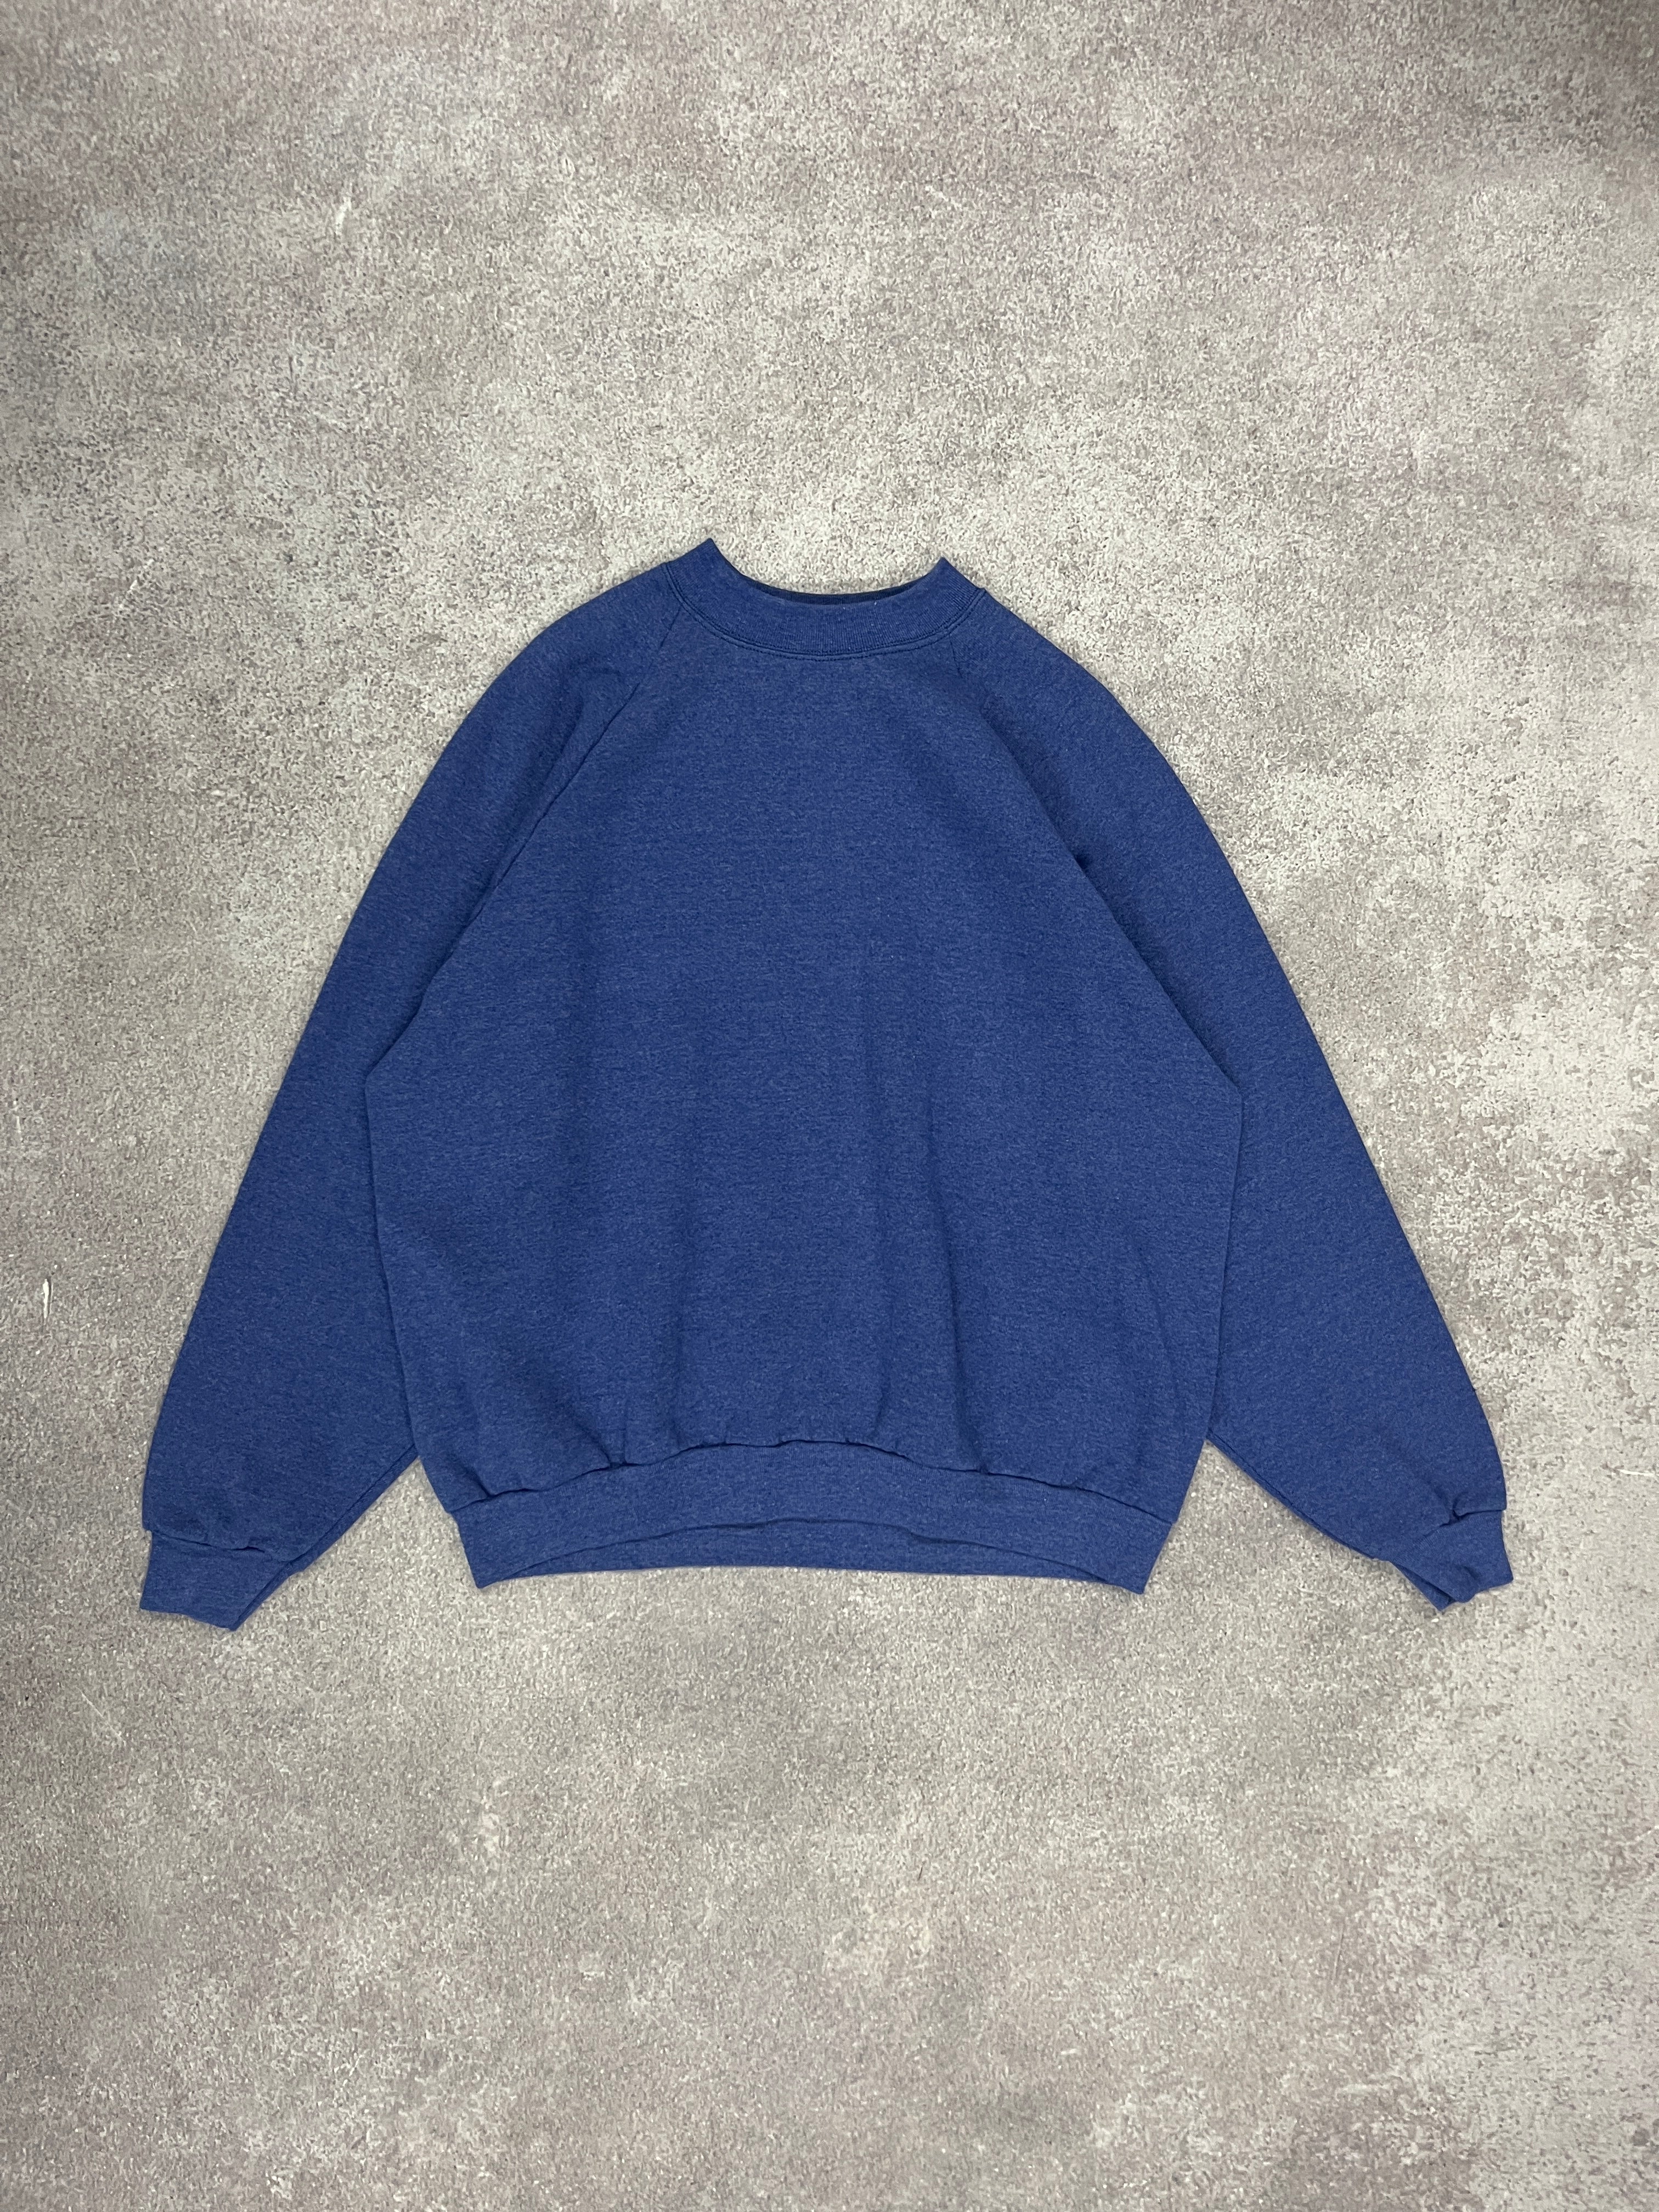 Vintage Blank Sweater Blue // Large - RHAGHOUSE VINTAGE